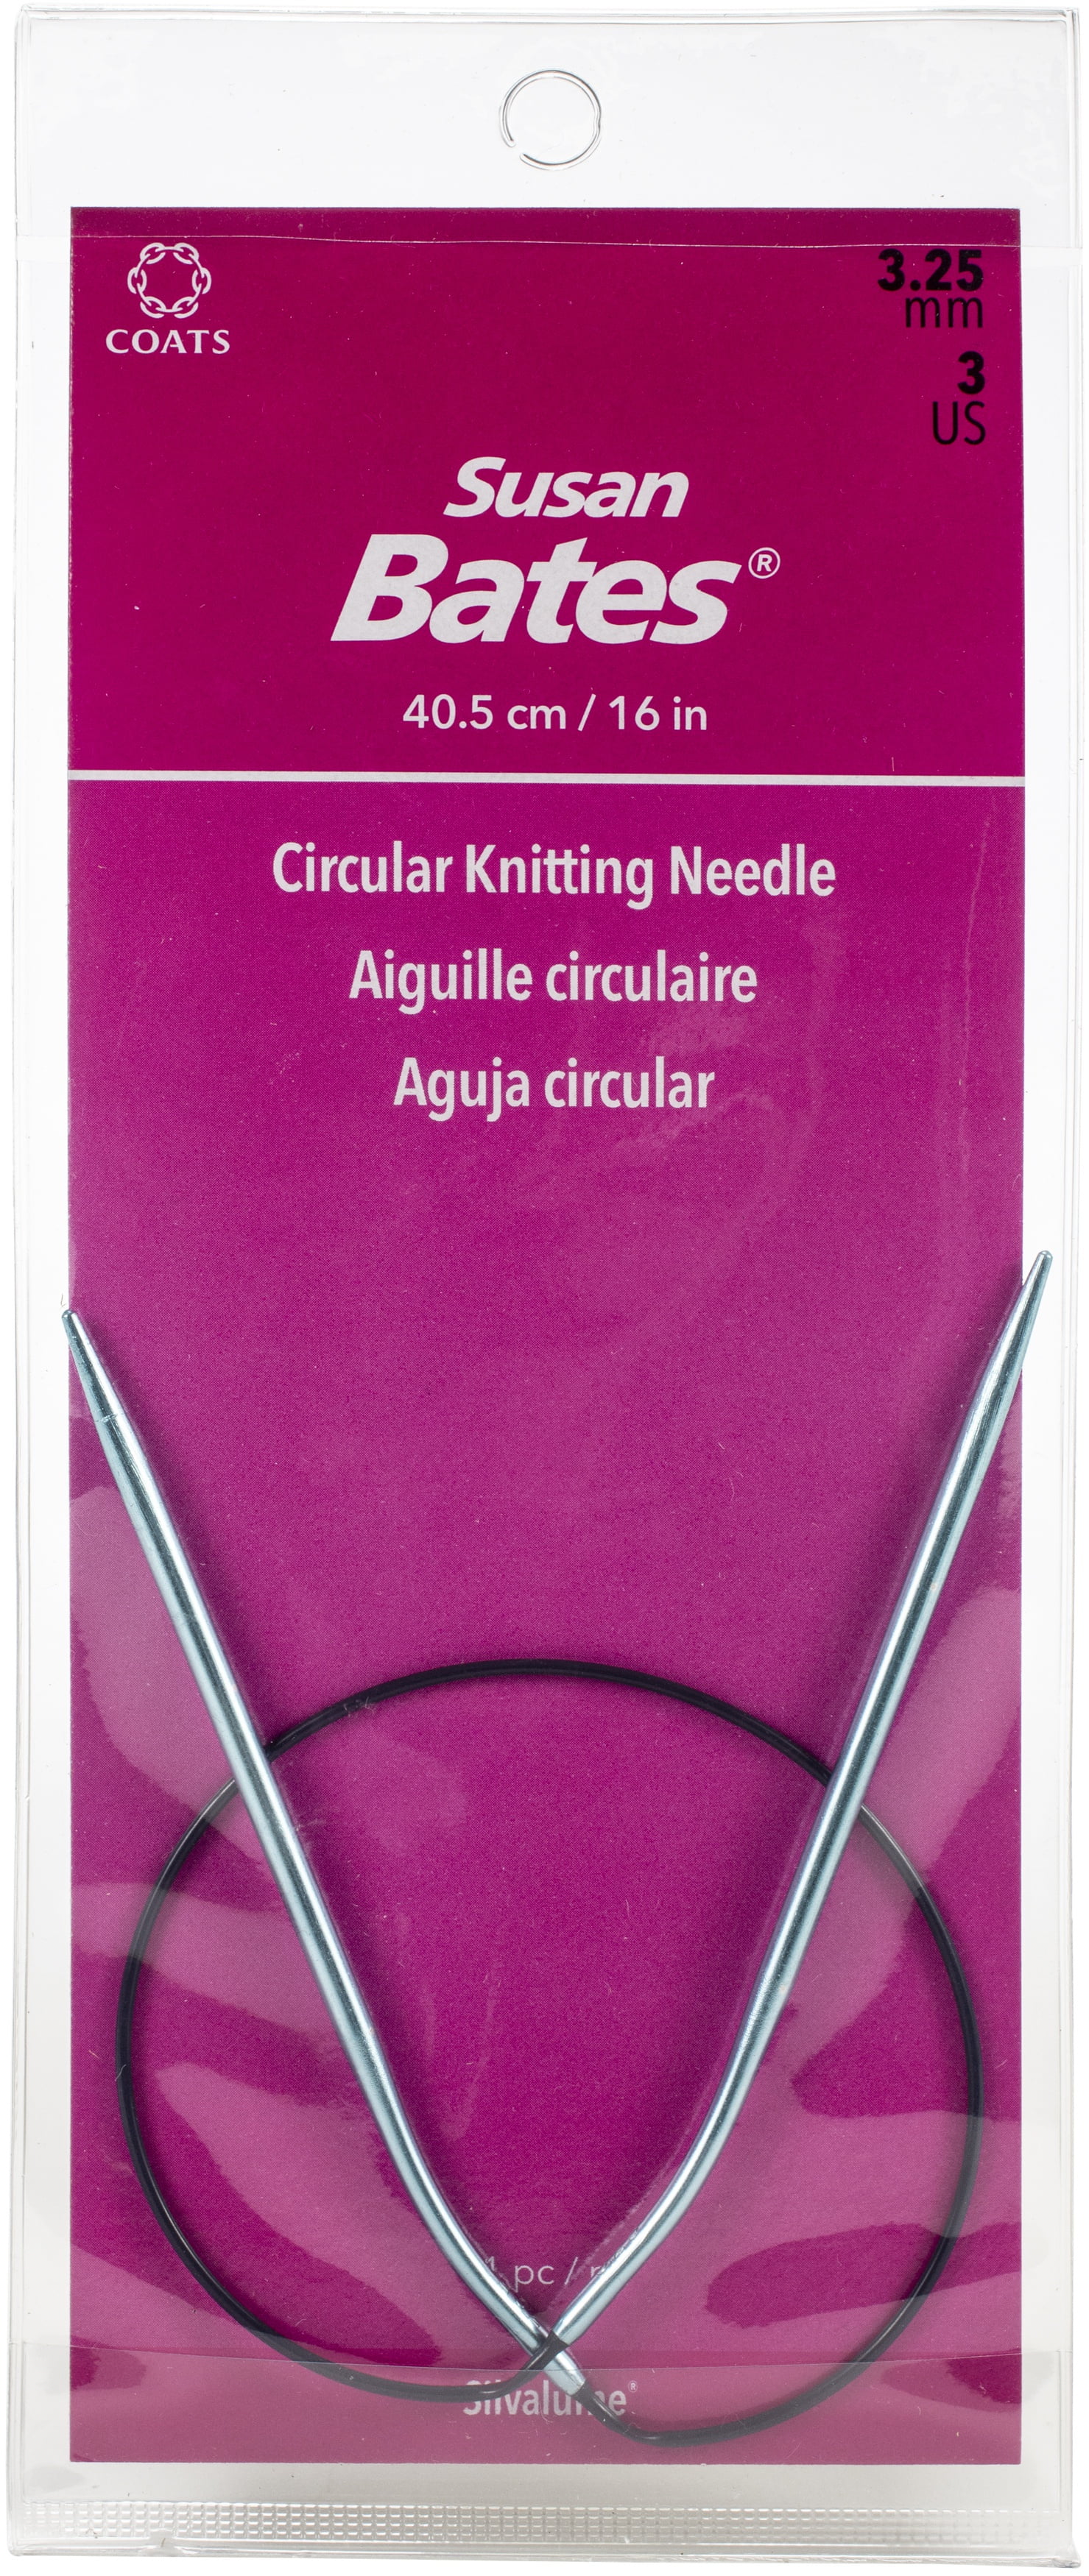 Size 13/9mm - Velocity Circular Knitting Needles 29 - Susan Bates